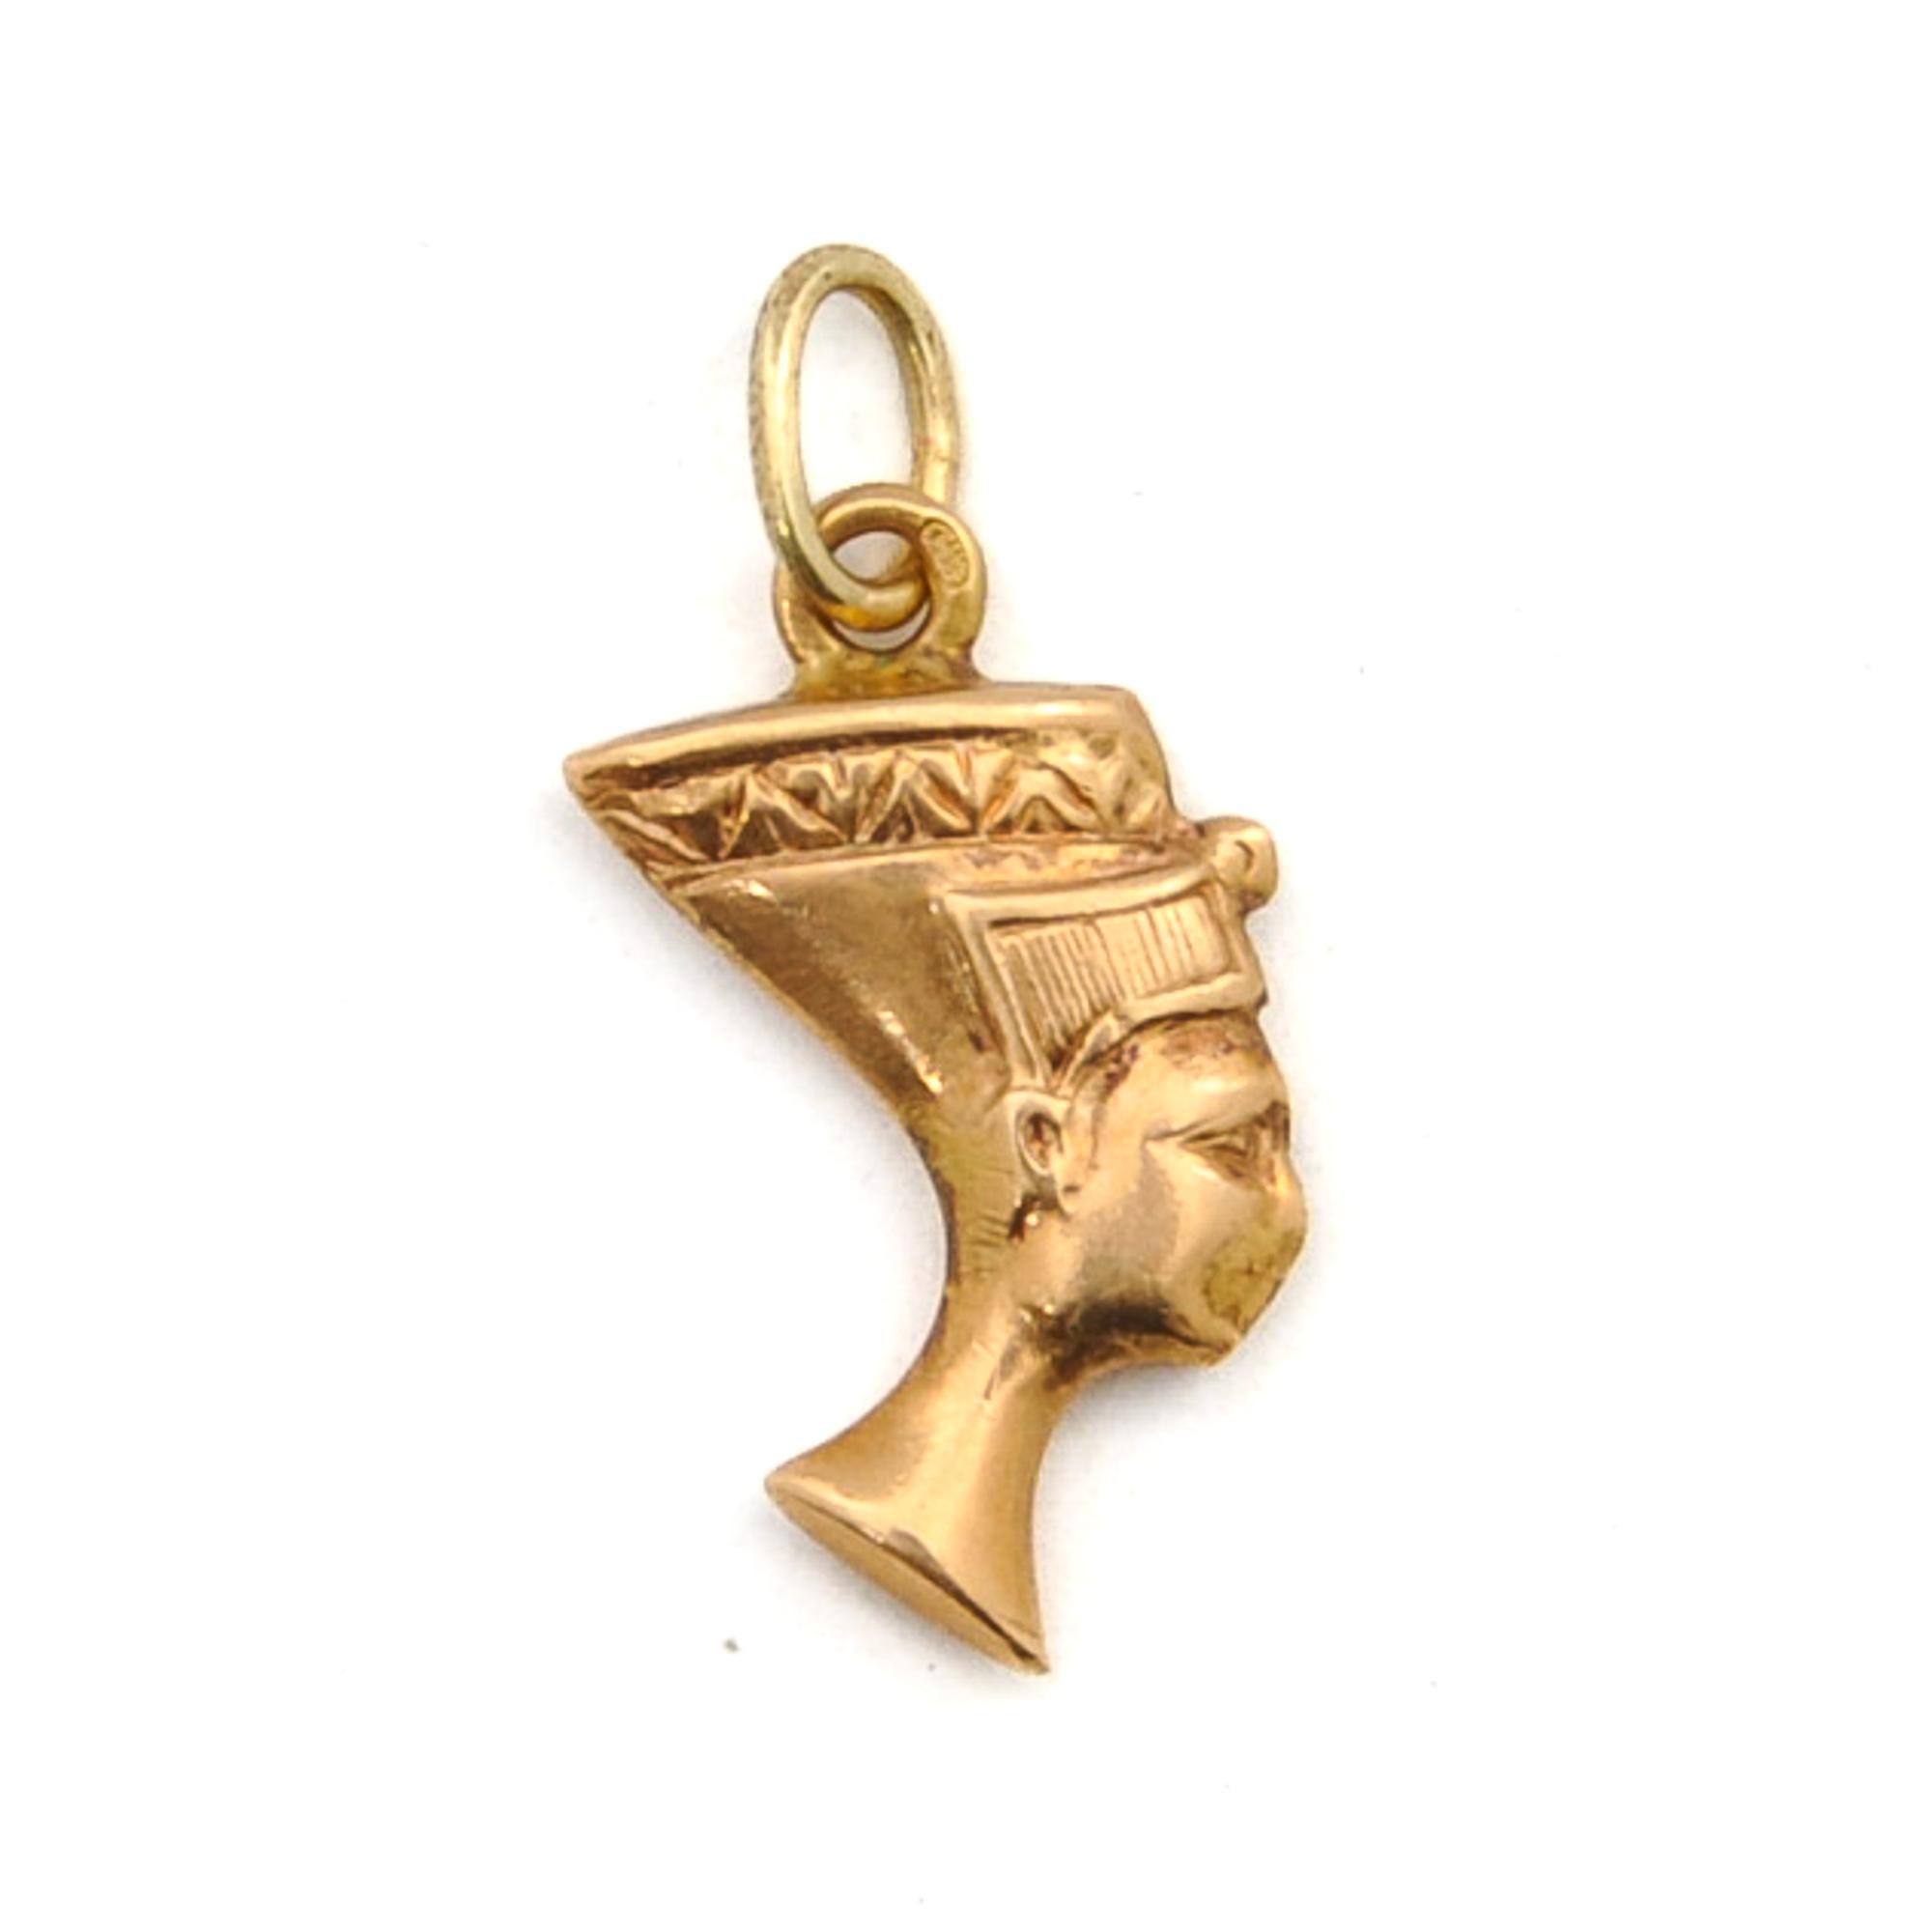  Pharaoh Nefertiti 18 Karat Gold Bust Charm Pendant In Good Condition For Sale In Rotterdam, NL